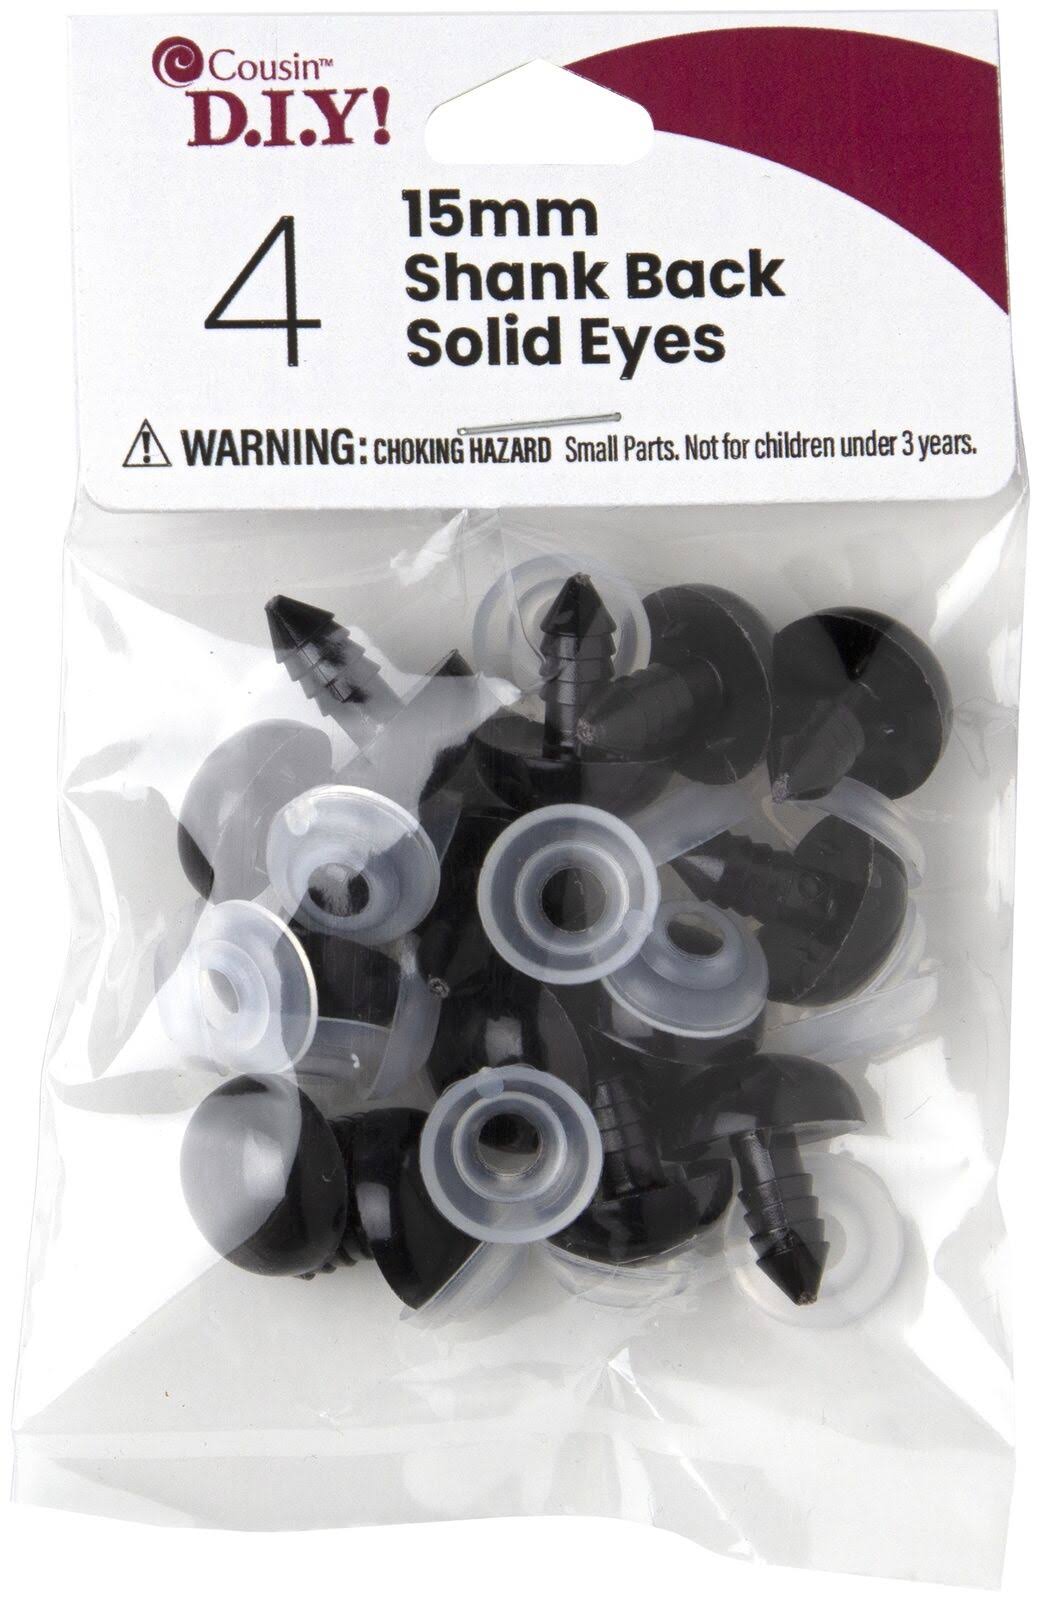 6 Pack Shank Back Solid Eyes 15mm 4/Pkg-Black -40000421. Cousin. Other Multi-Purpose Crafting. 191648093629.